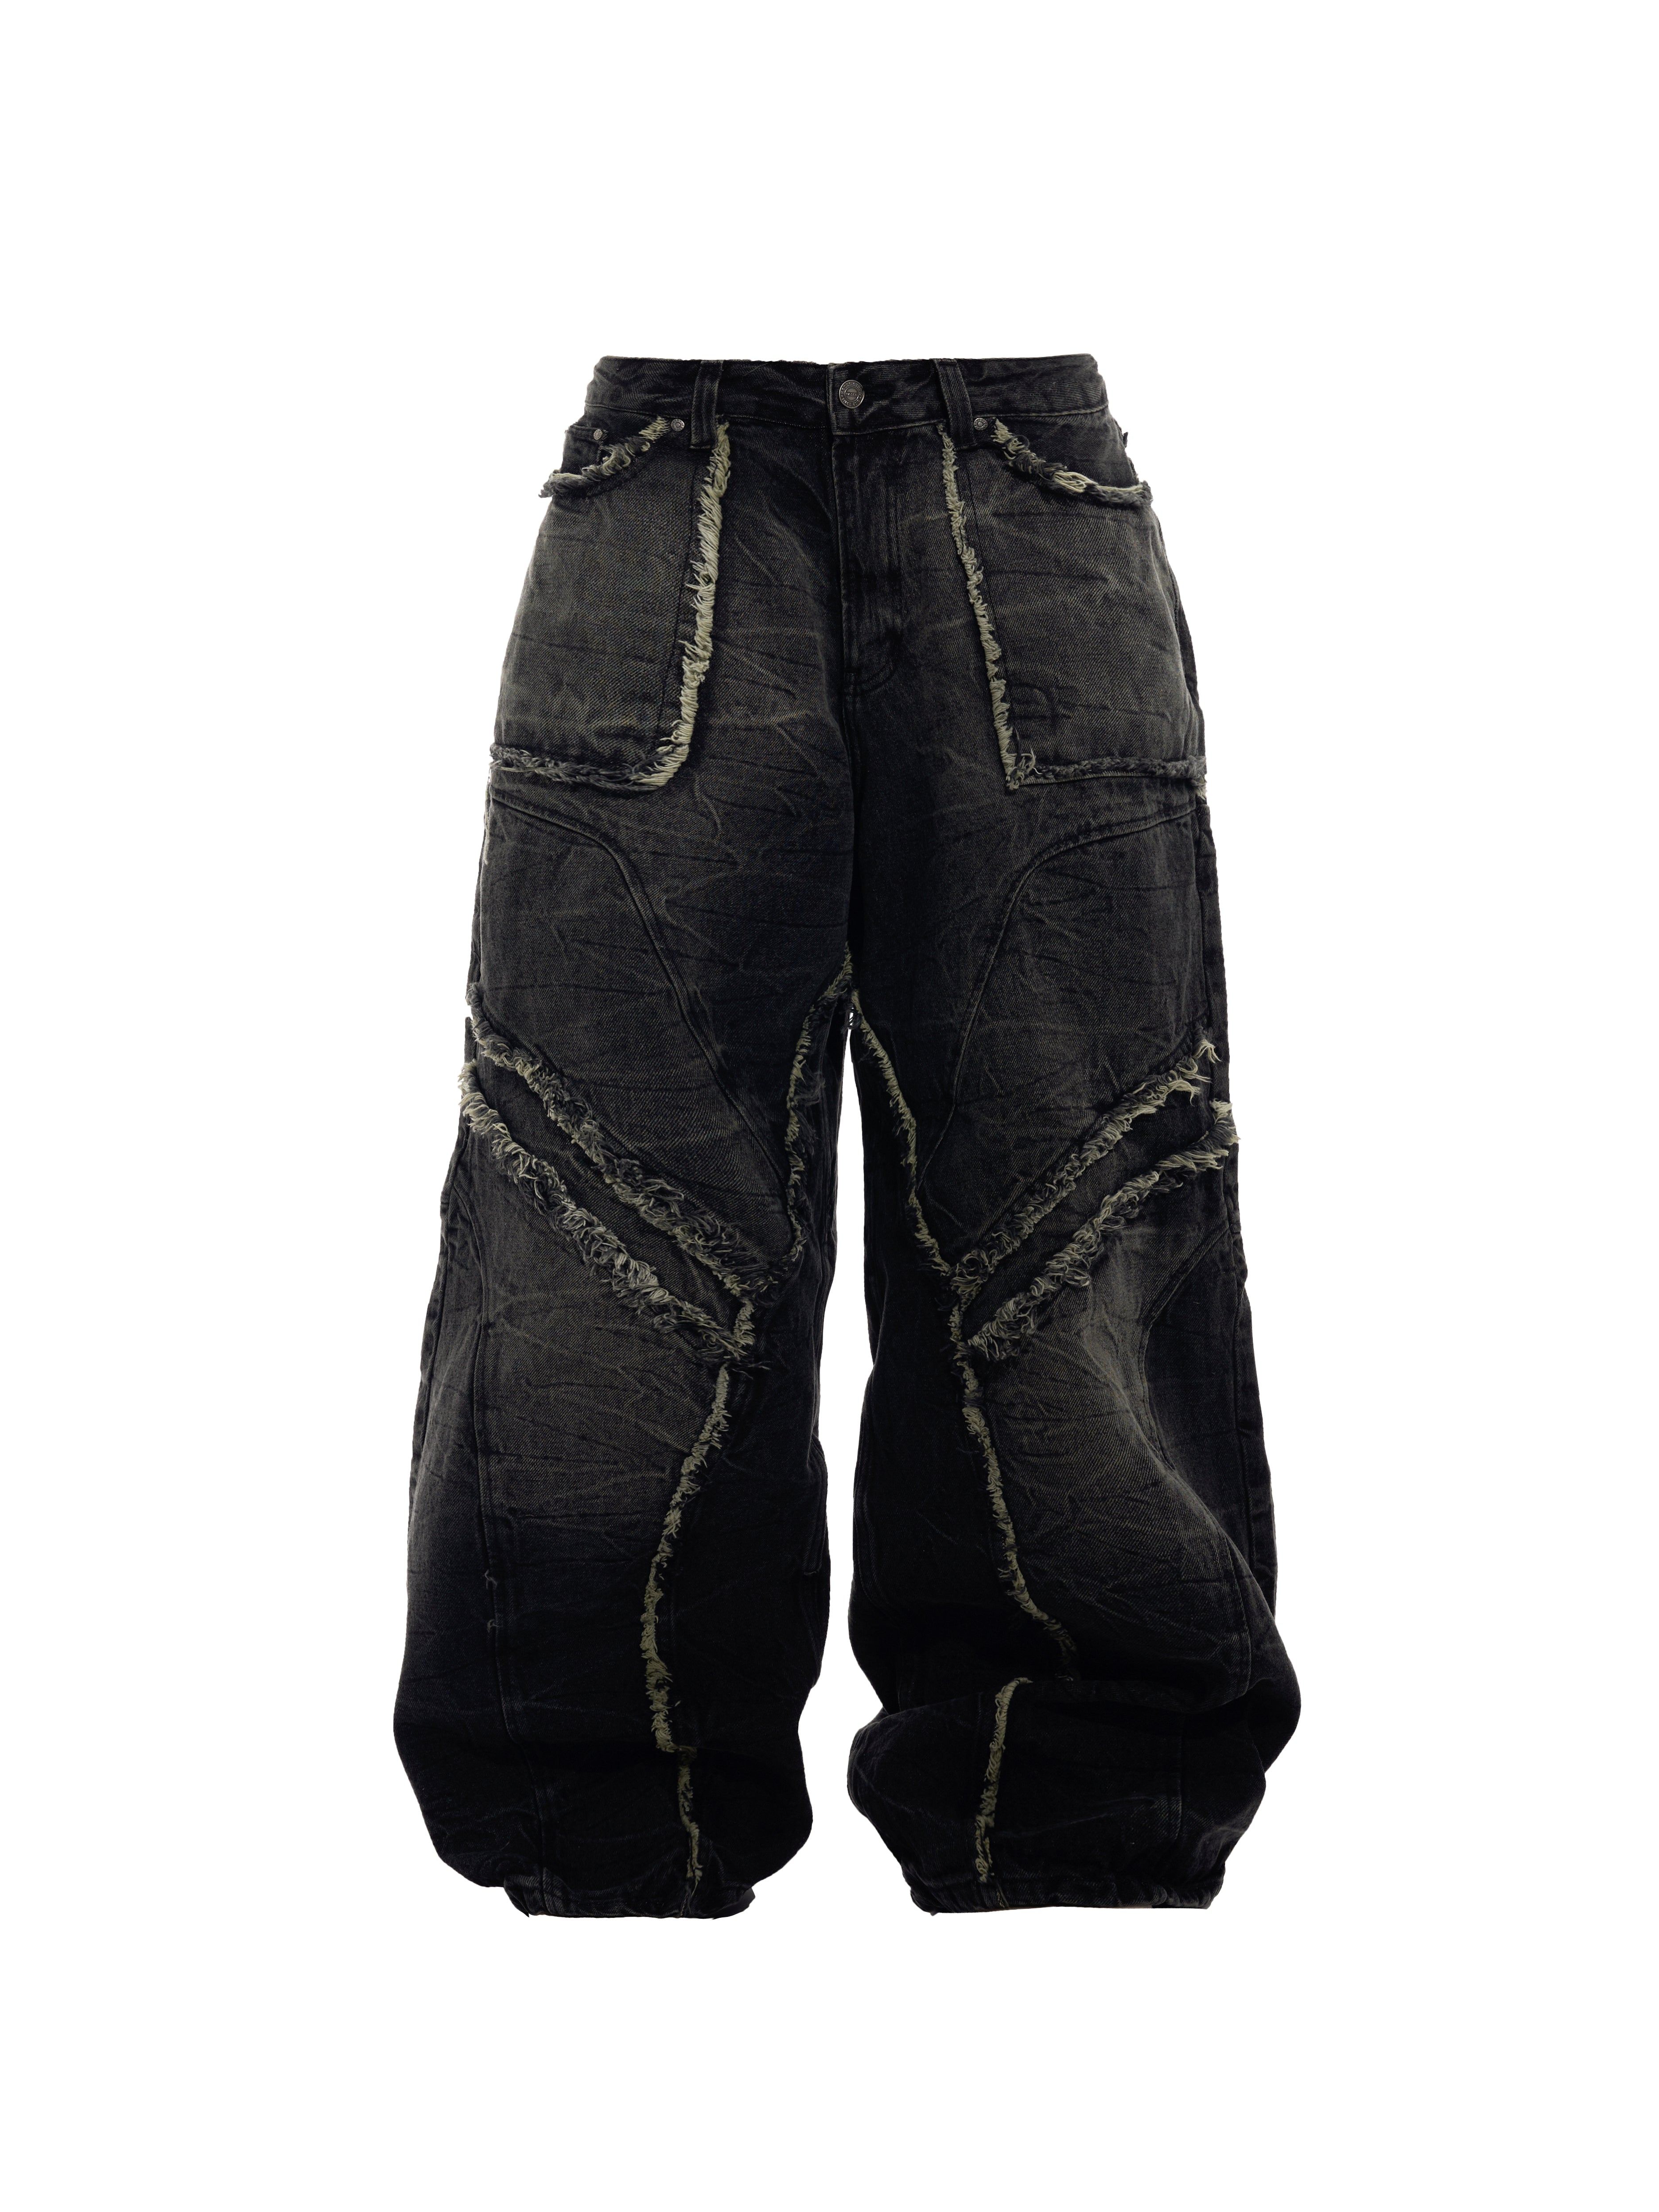 Tectonic rift jeans